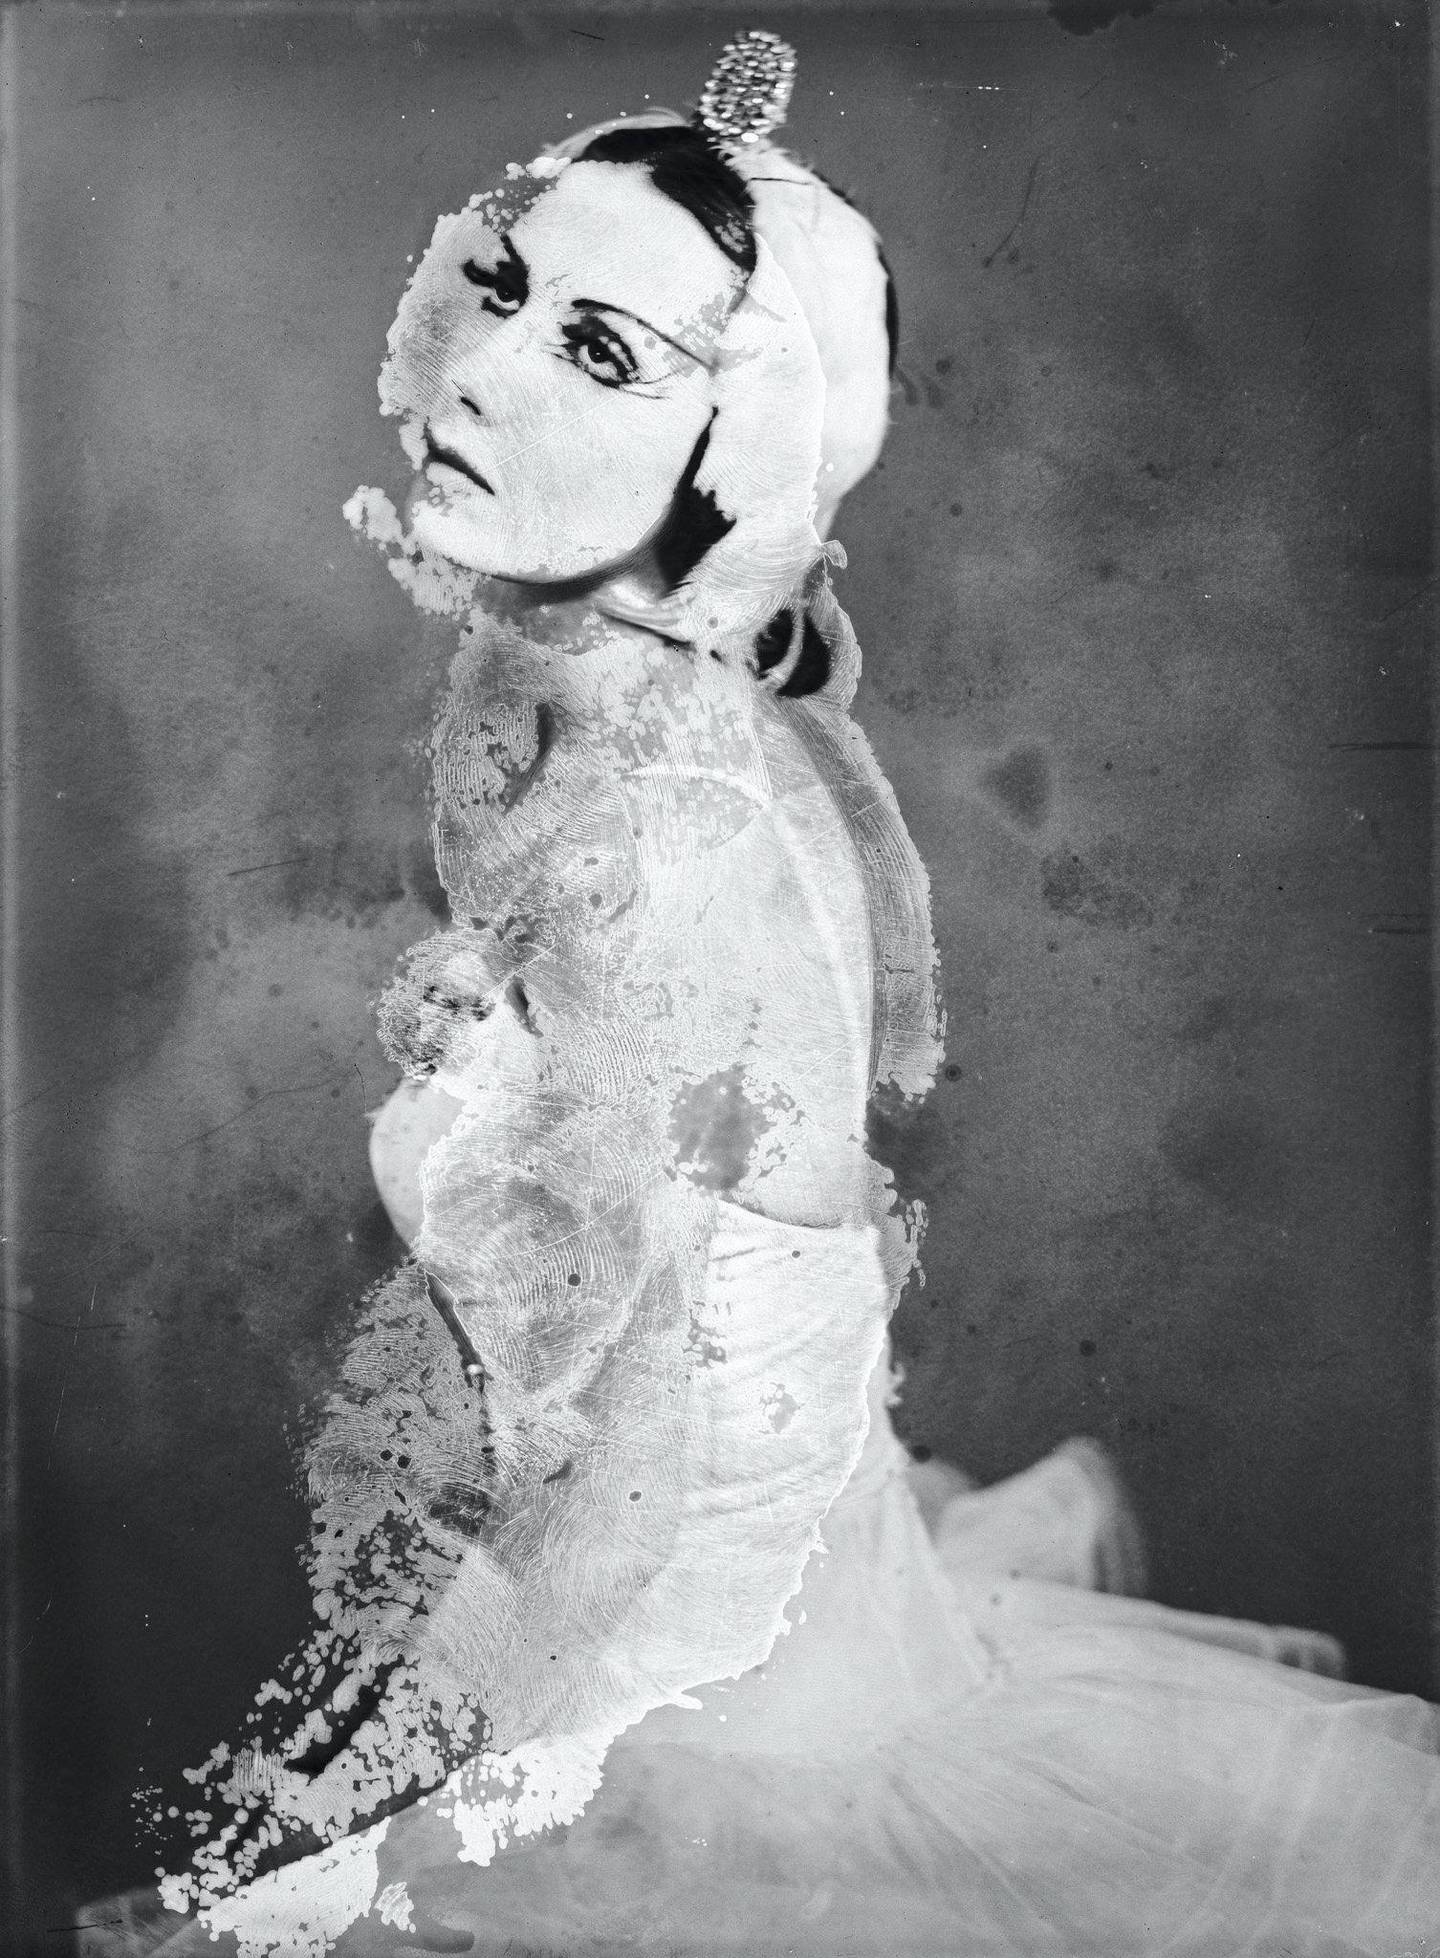 A portrait of Tamara Toumanova, ballet dancer, in Egypt, 1950-1960. Armand Collection, courtesy of the Arab Image Foundation